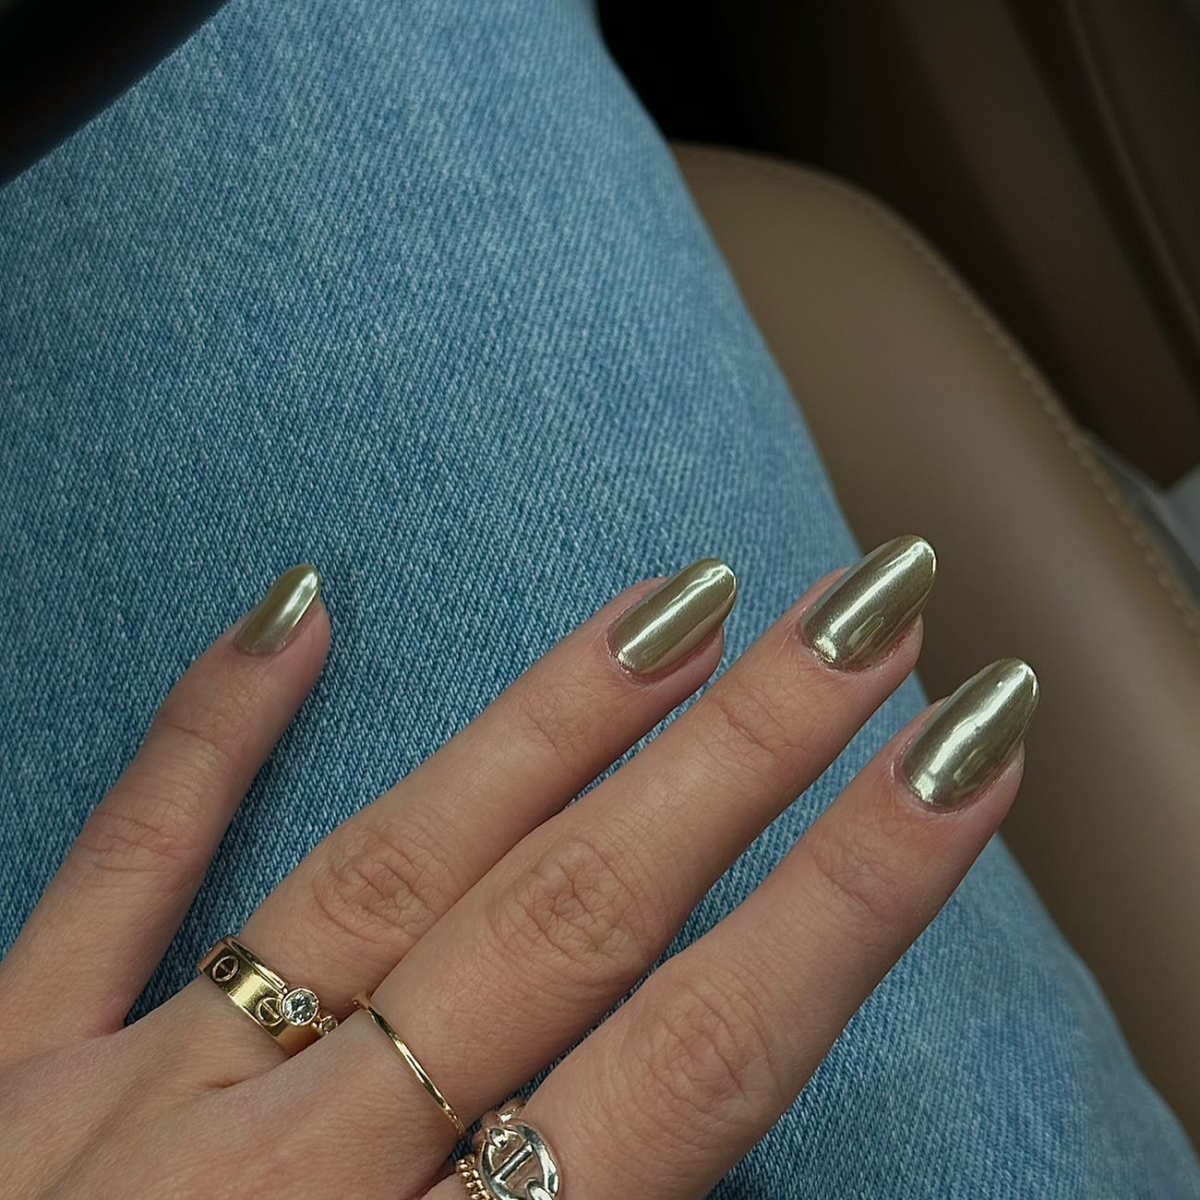 chrome sage green nails